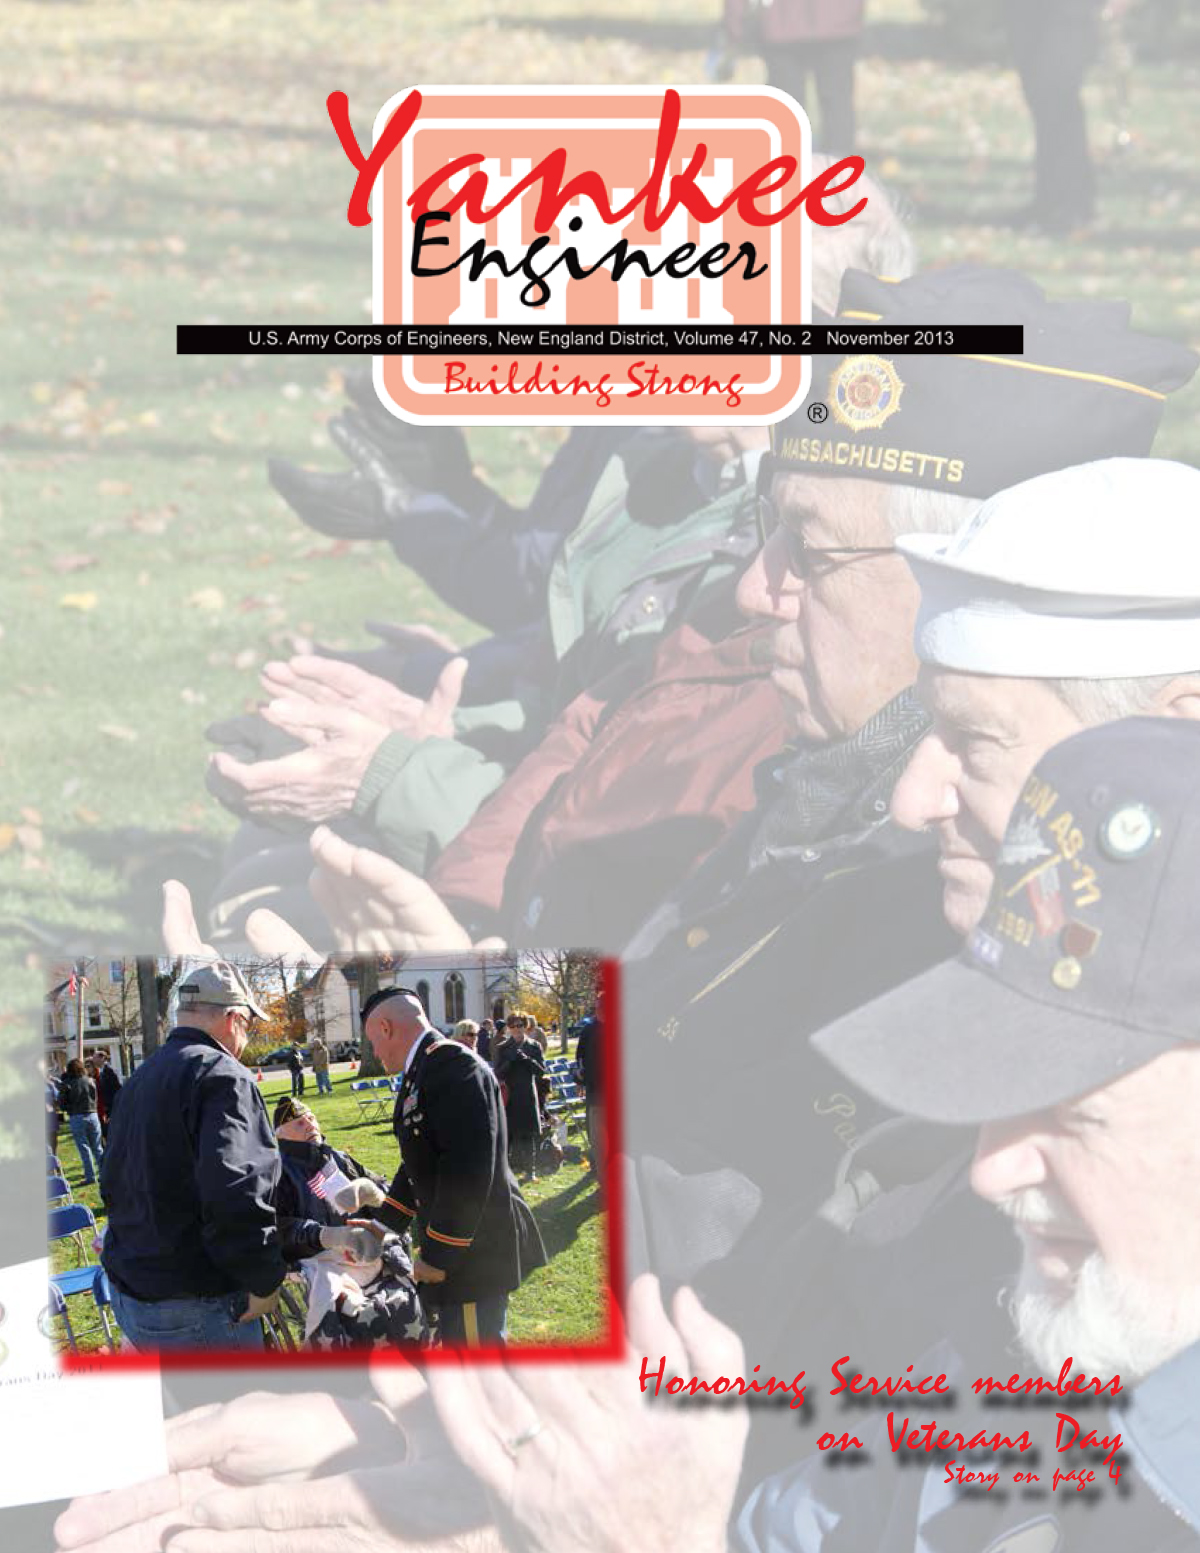 November 2013 issue of the Yankee Engineer magazine